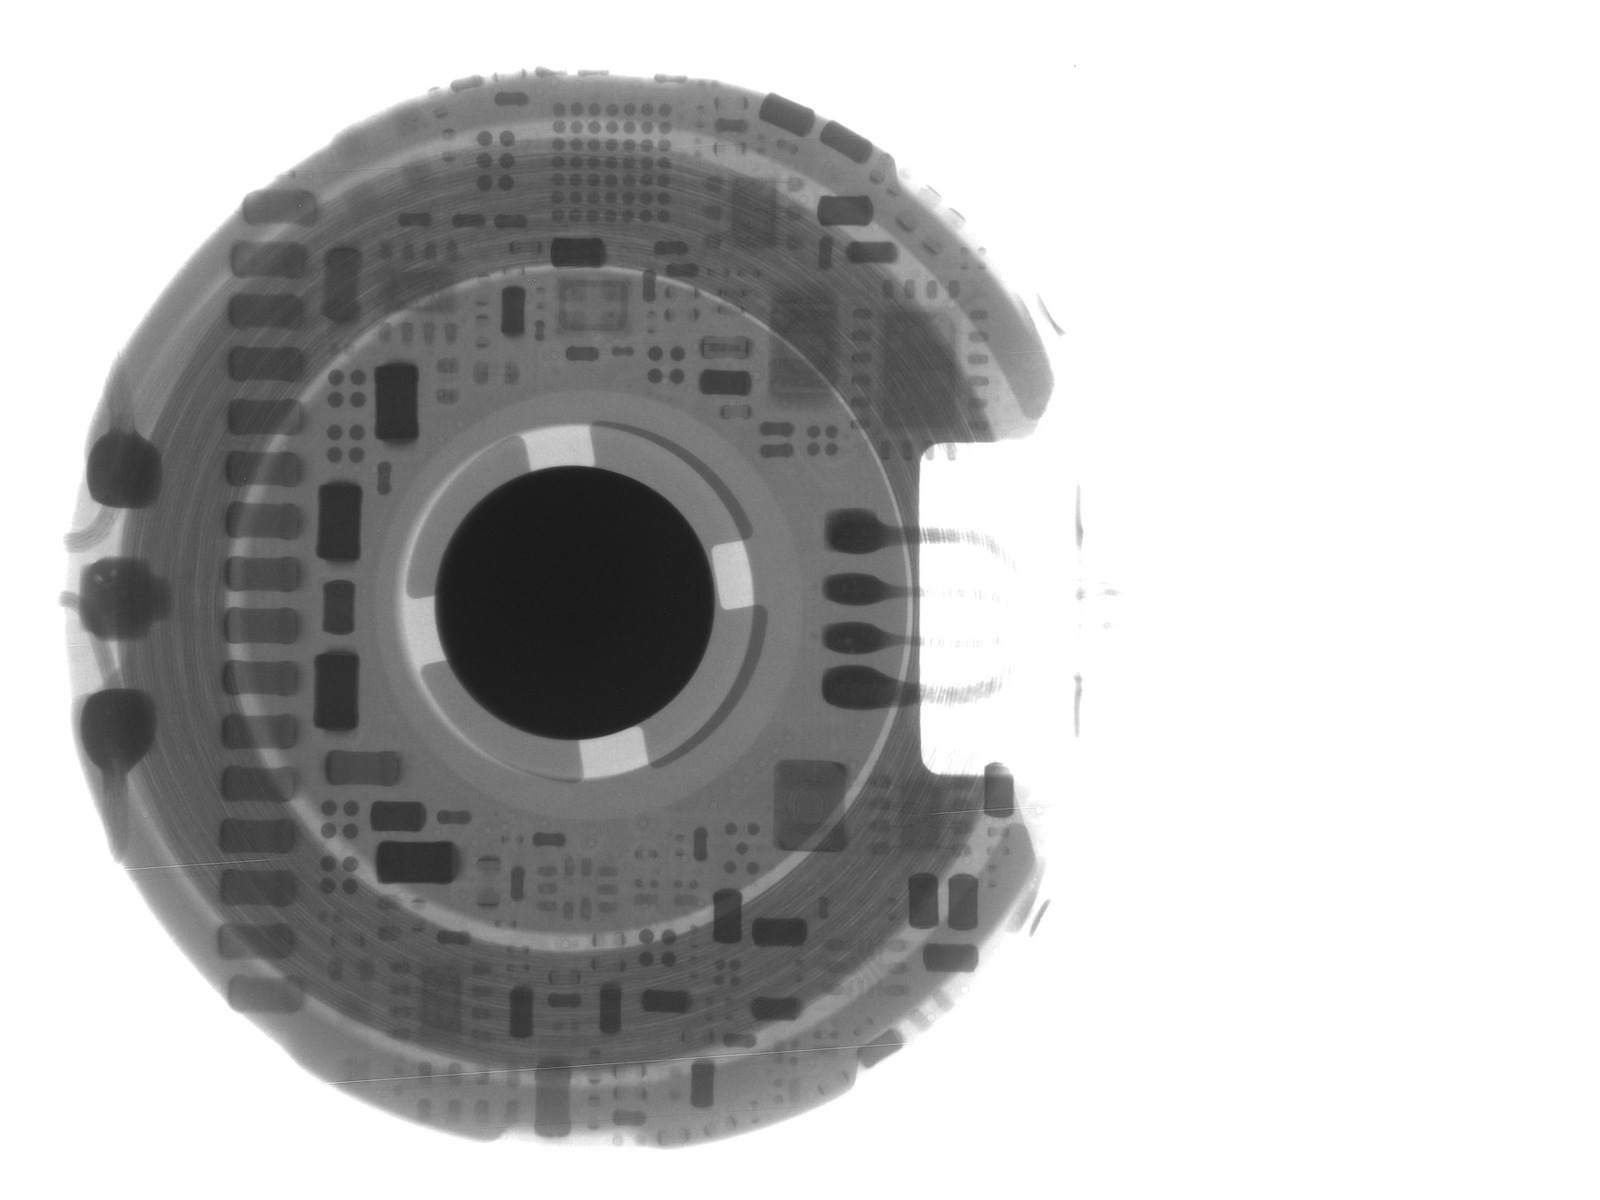 chip S1 Apple Watch skannad röntgen 2 - iDevice.ro